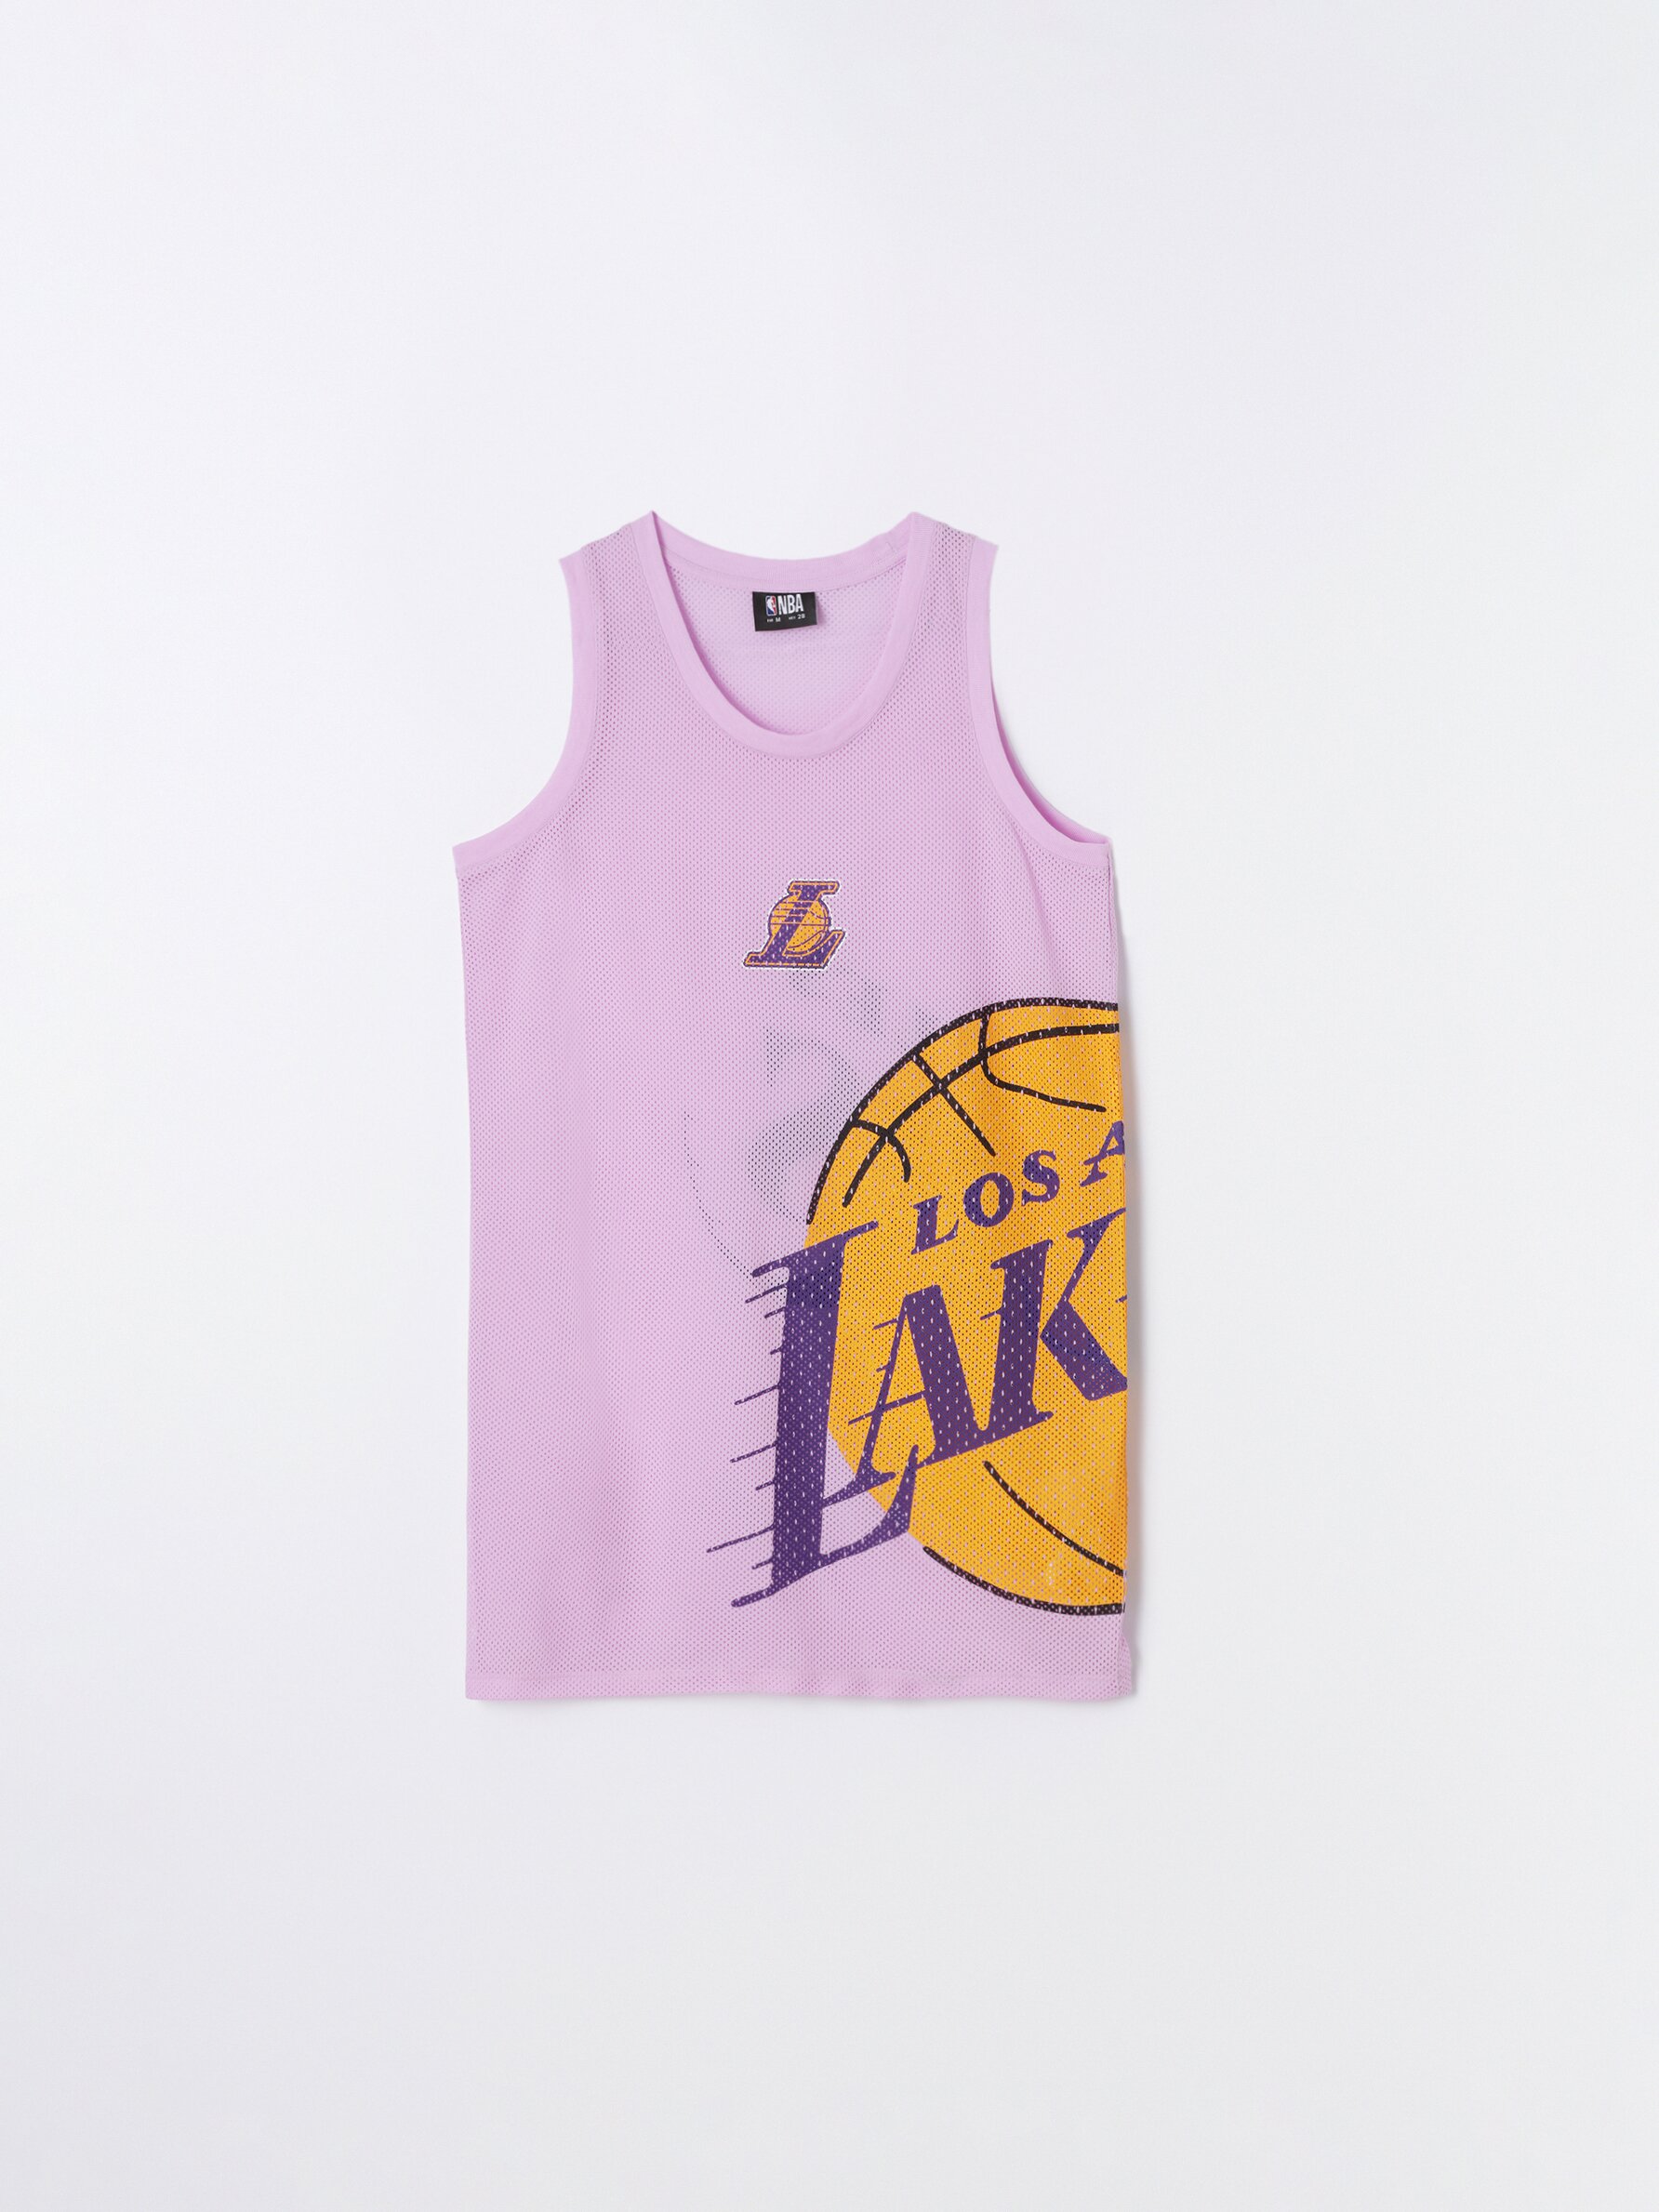 Los Angeles Lakers NBA dress